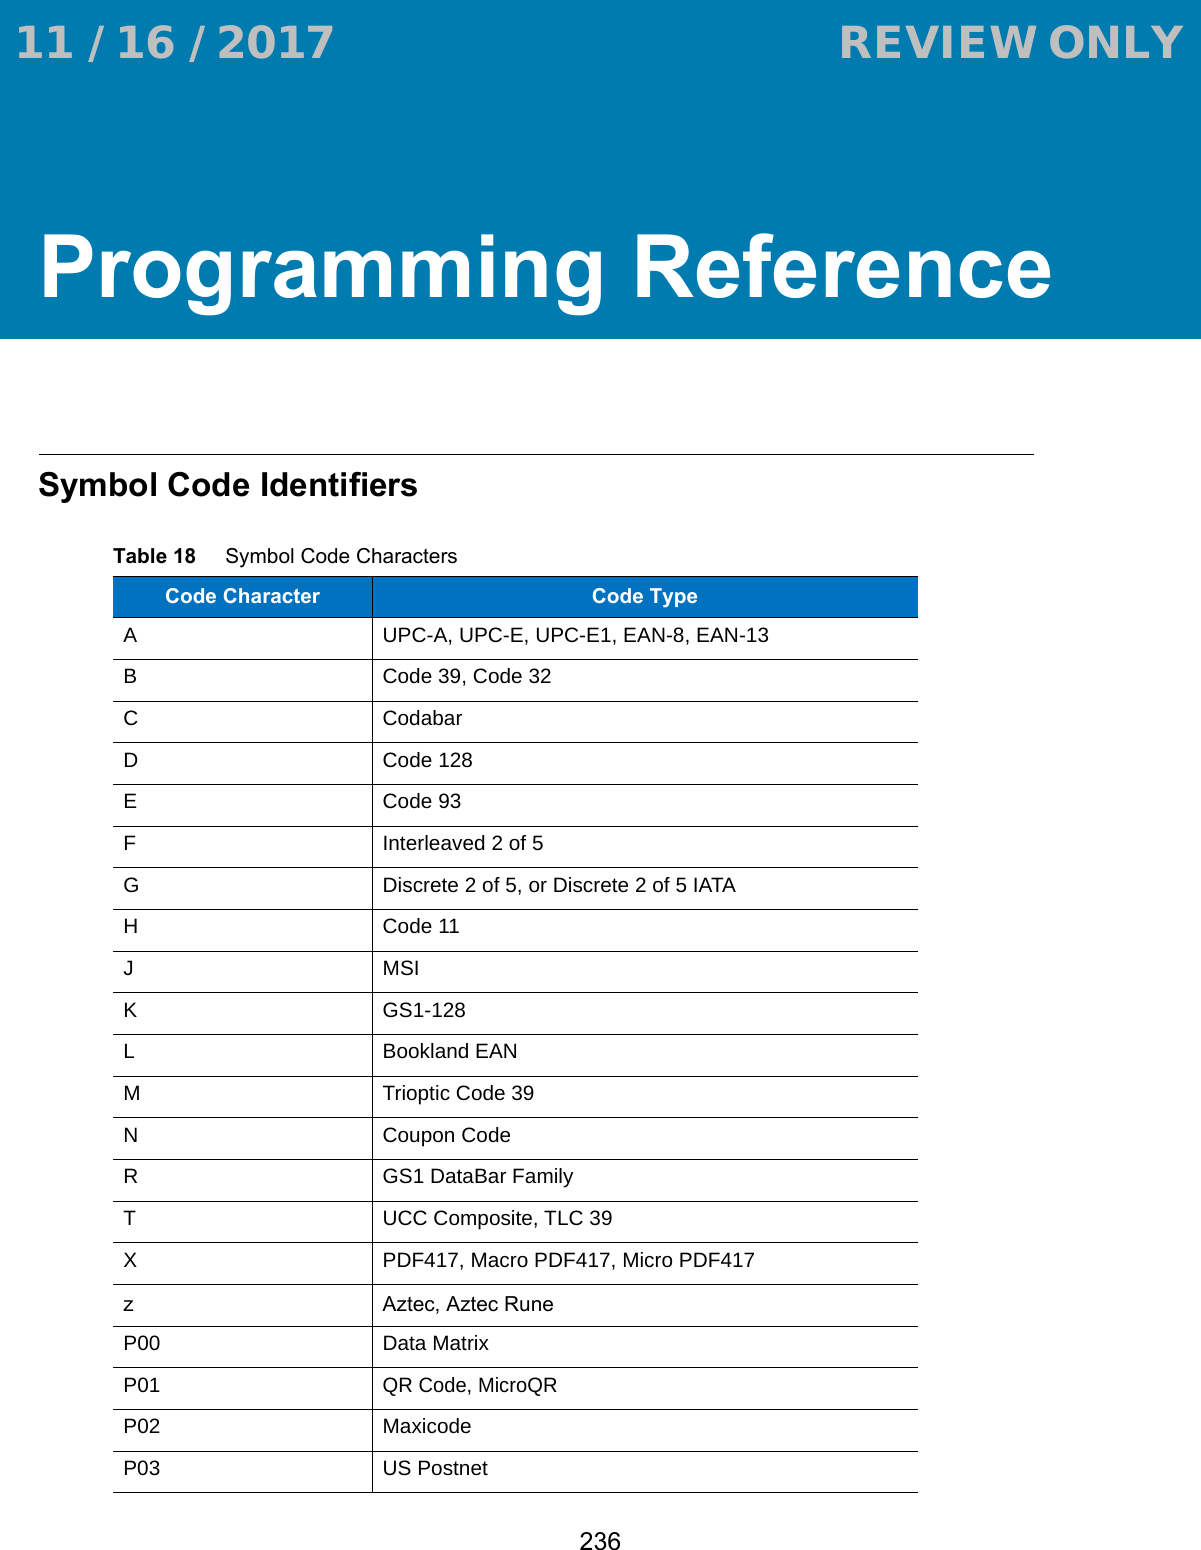 236Programming ReferenceSymbol Code IdentifiersTable 18     Symbol Code CharactersCode Character Code TypeA UPC-A, UPC-E, UPC-E1, EAN-8, EAN-13B Code 39, Code 32C CodabarD Code 128E Code 93F Interleaved 2 of 5G Discrete 2 of 5, or Discrete 2 of 5 IATAH Code 11JMSIKGS1-128L Bookland EANM Trioptic Code 39N Coupon CodeR GS1 DataBar FamilyT UCC Composite, TLC 39X PDF417, Macro PDF417, Micro PDF417z Aztec, Aztec RuneP00 Data MatrixP01QR Code, MicroQRP02 MaxicodeP03 US Postnet 11 / 16 / 2017                                  REVIEW ONLY                             REVIEW ONLY - REVIEW ONLY - REVIEW ONLY